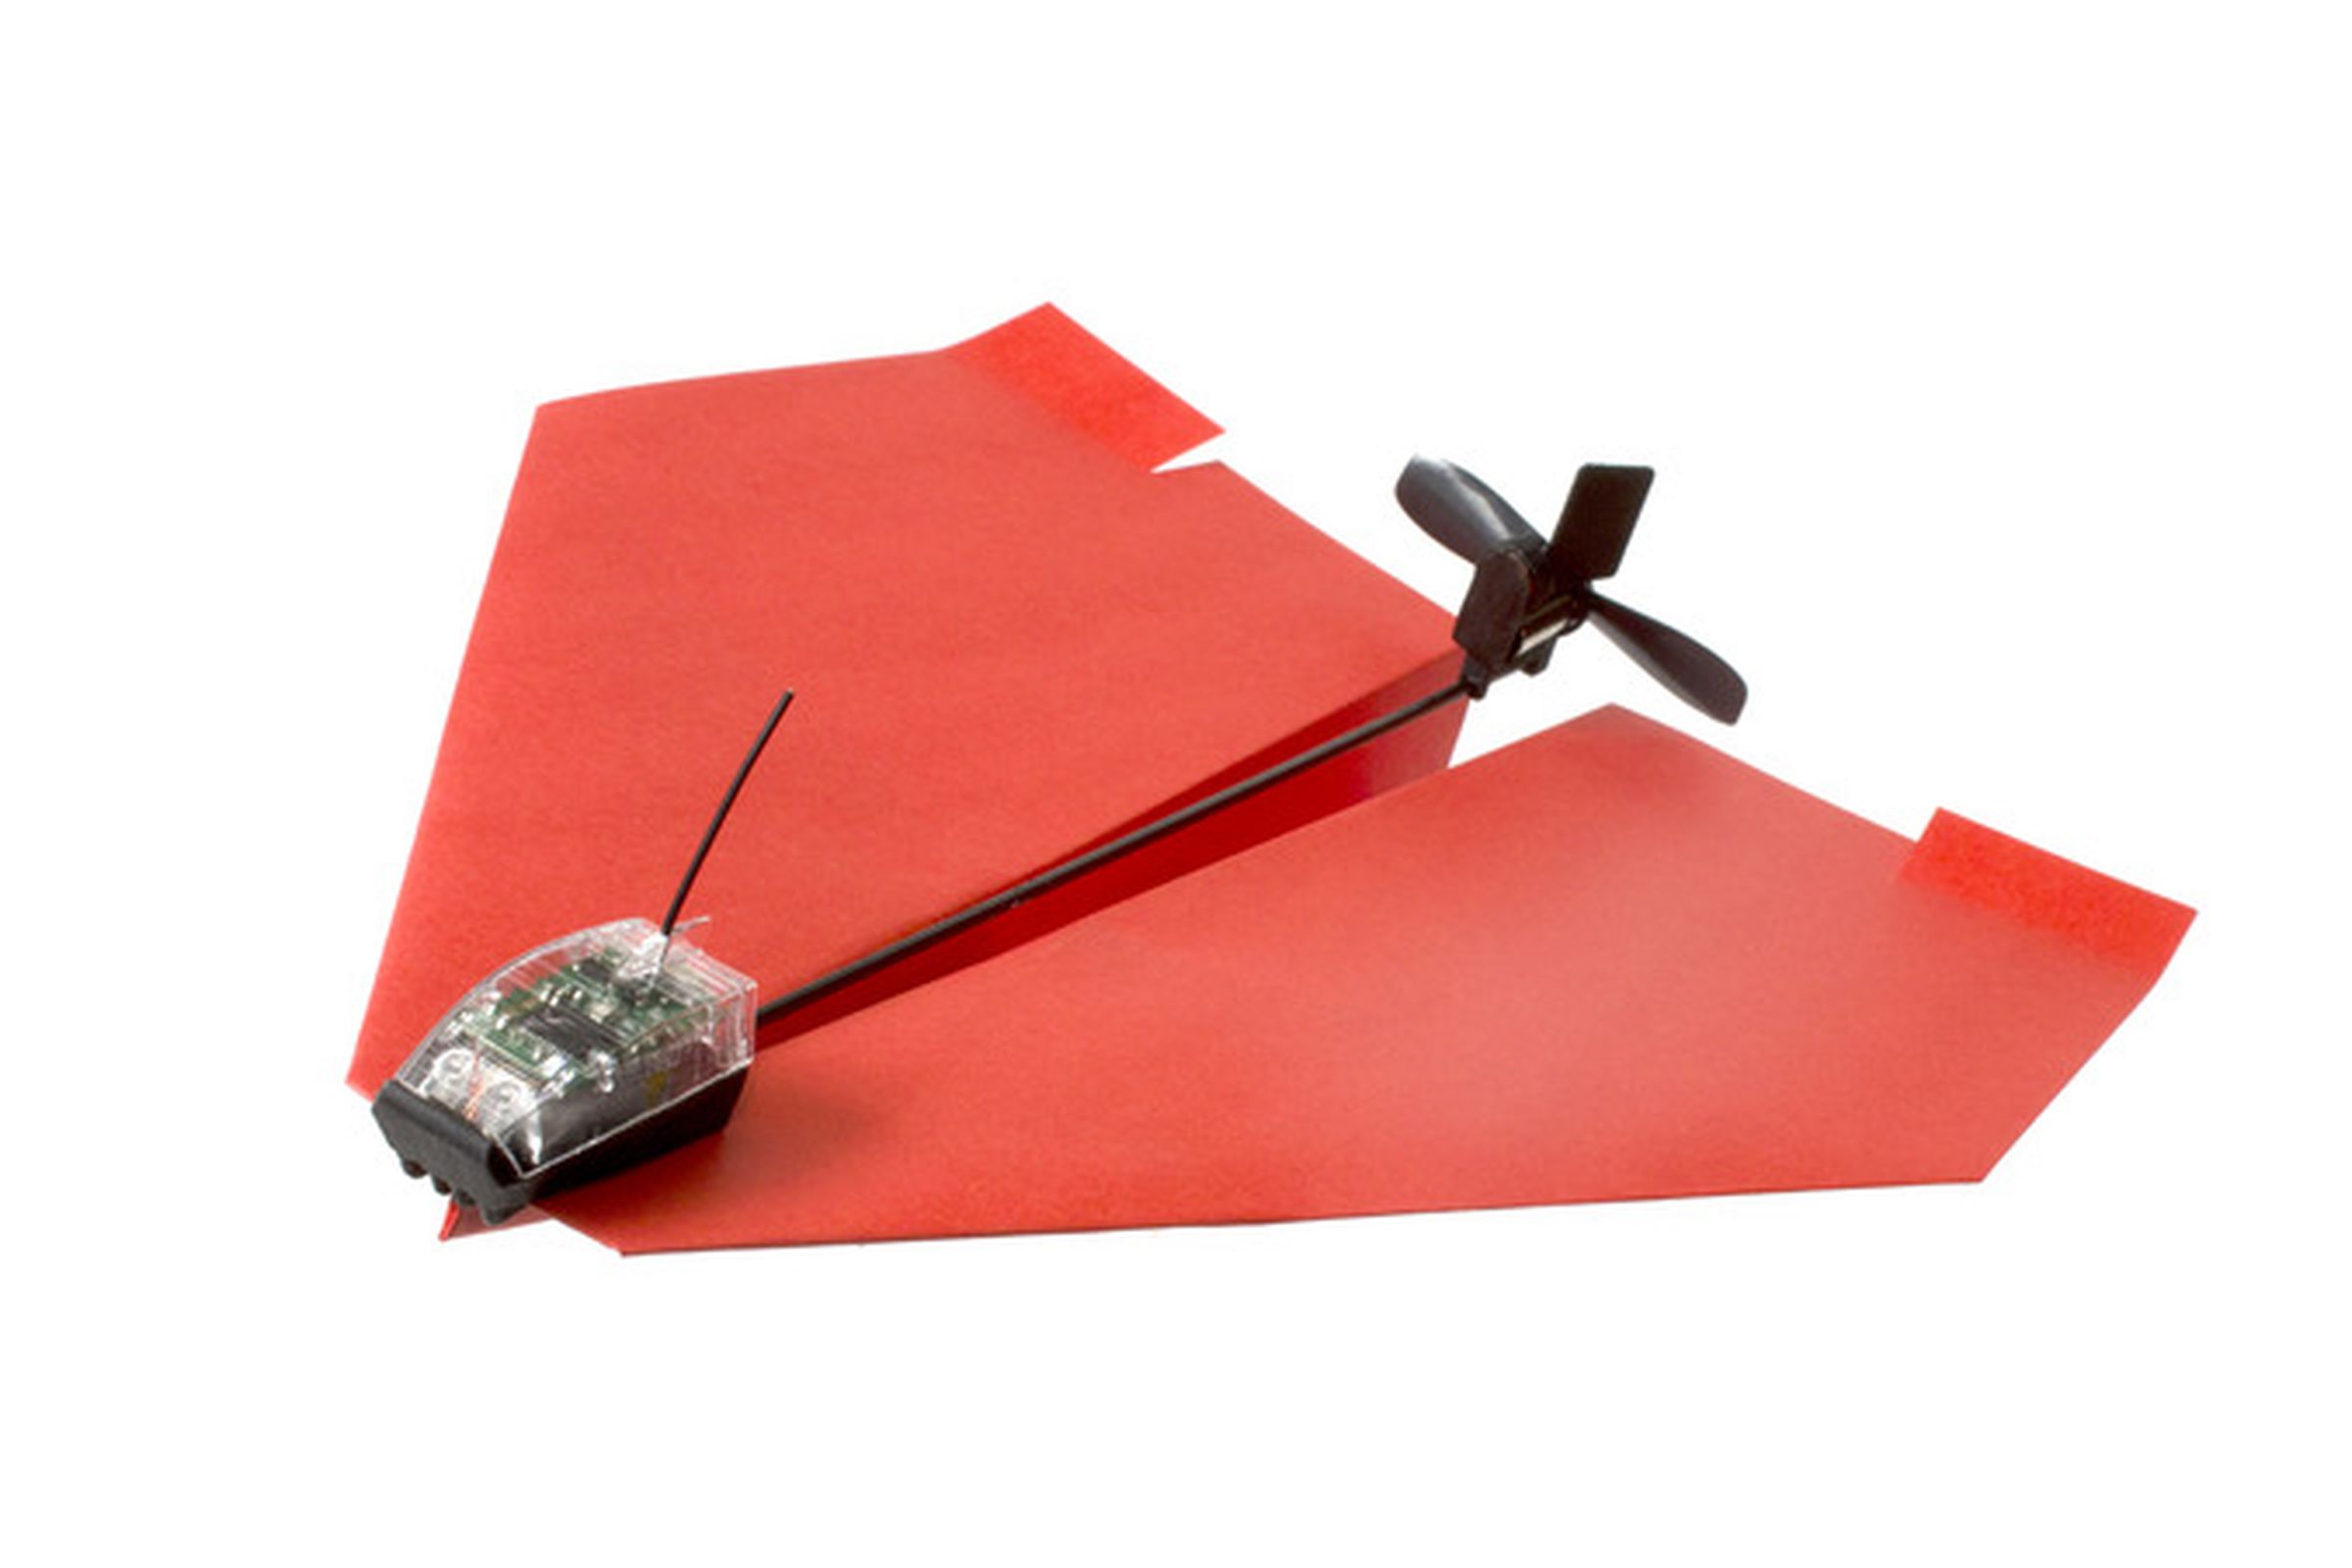 PowerUp paper plane